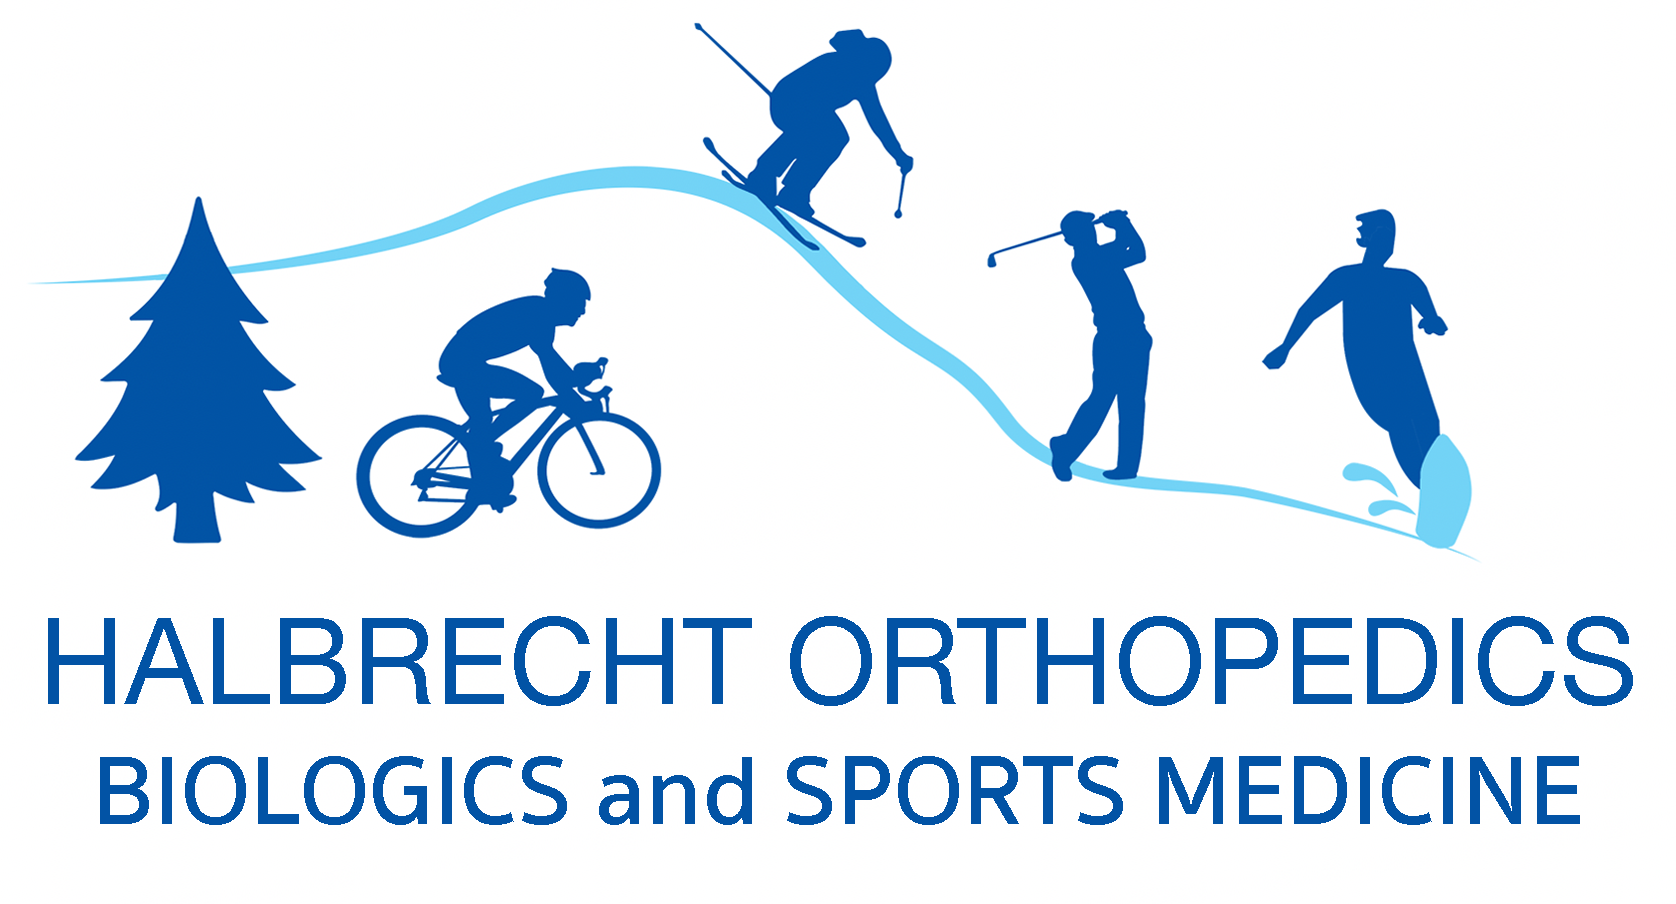 Halbrecht Orthopedics Biologics and Sports Medicine